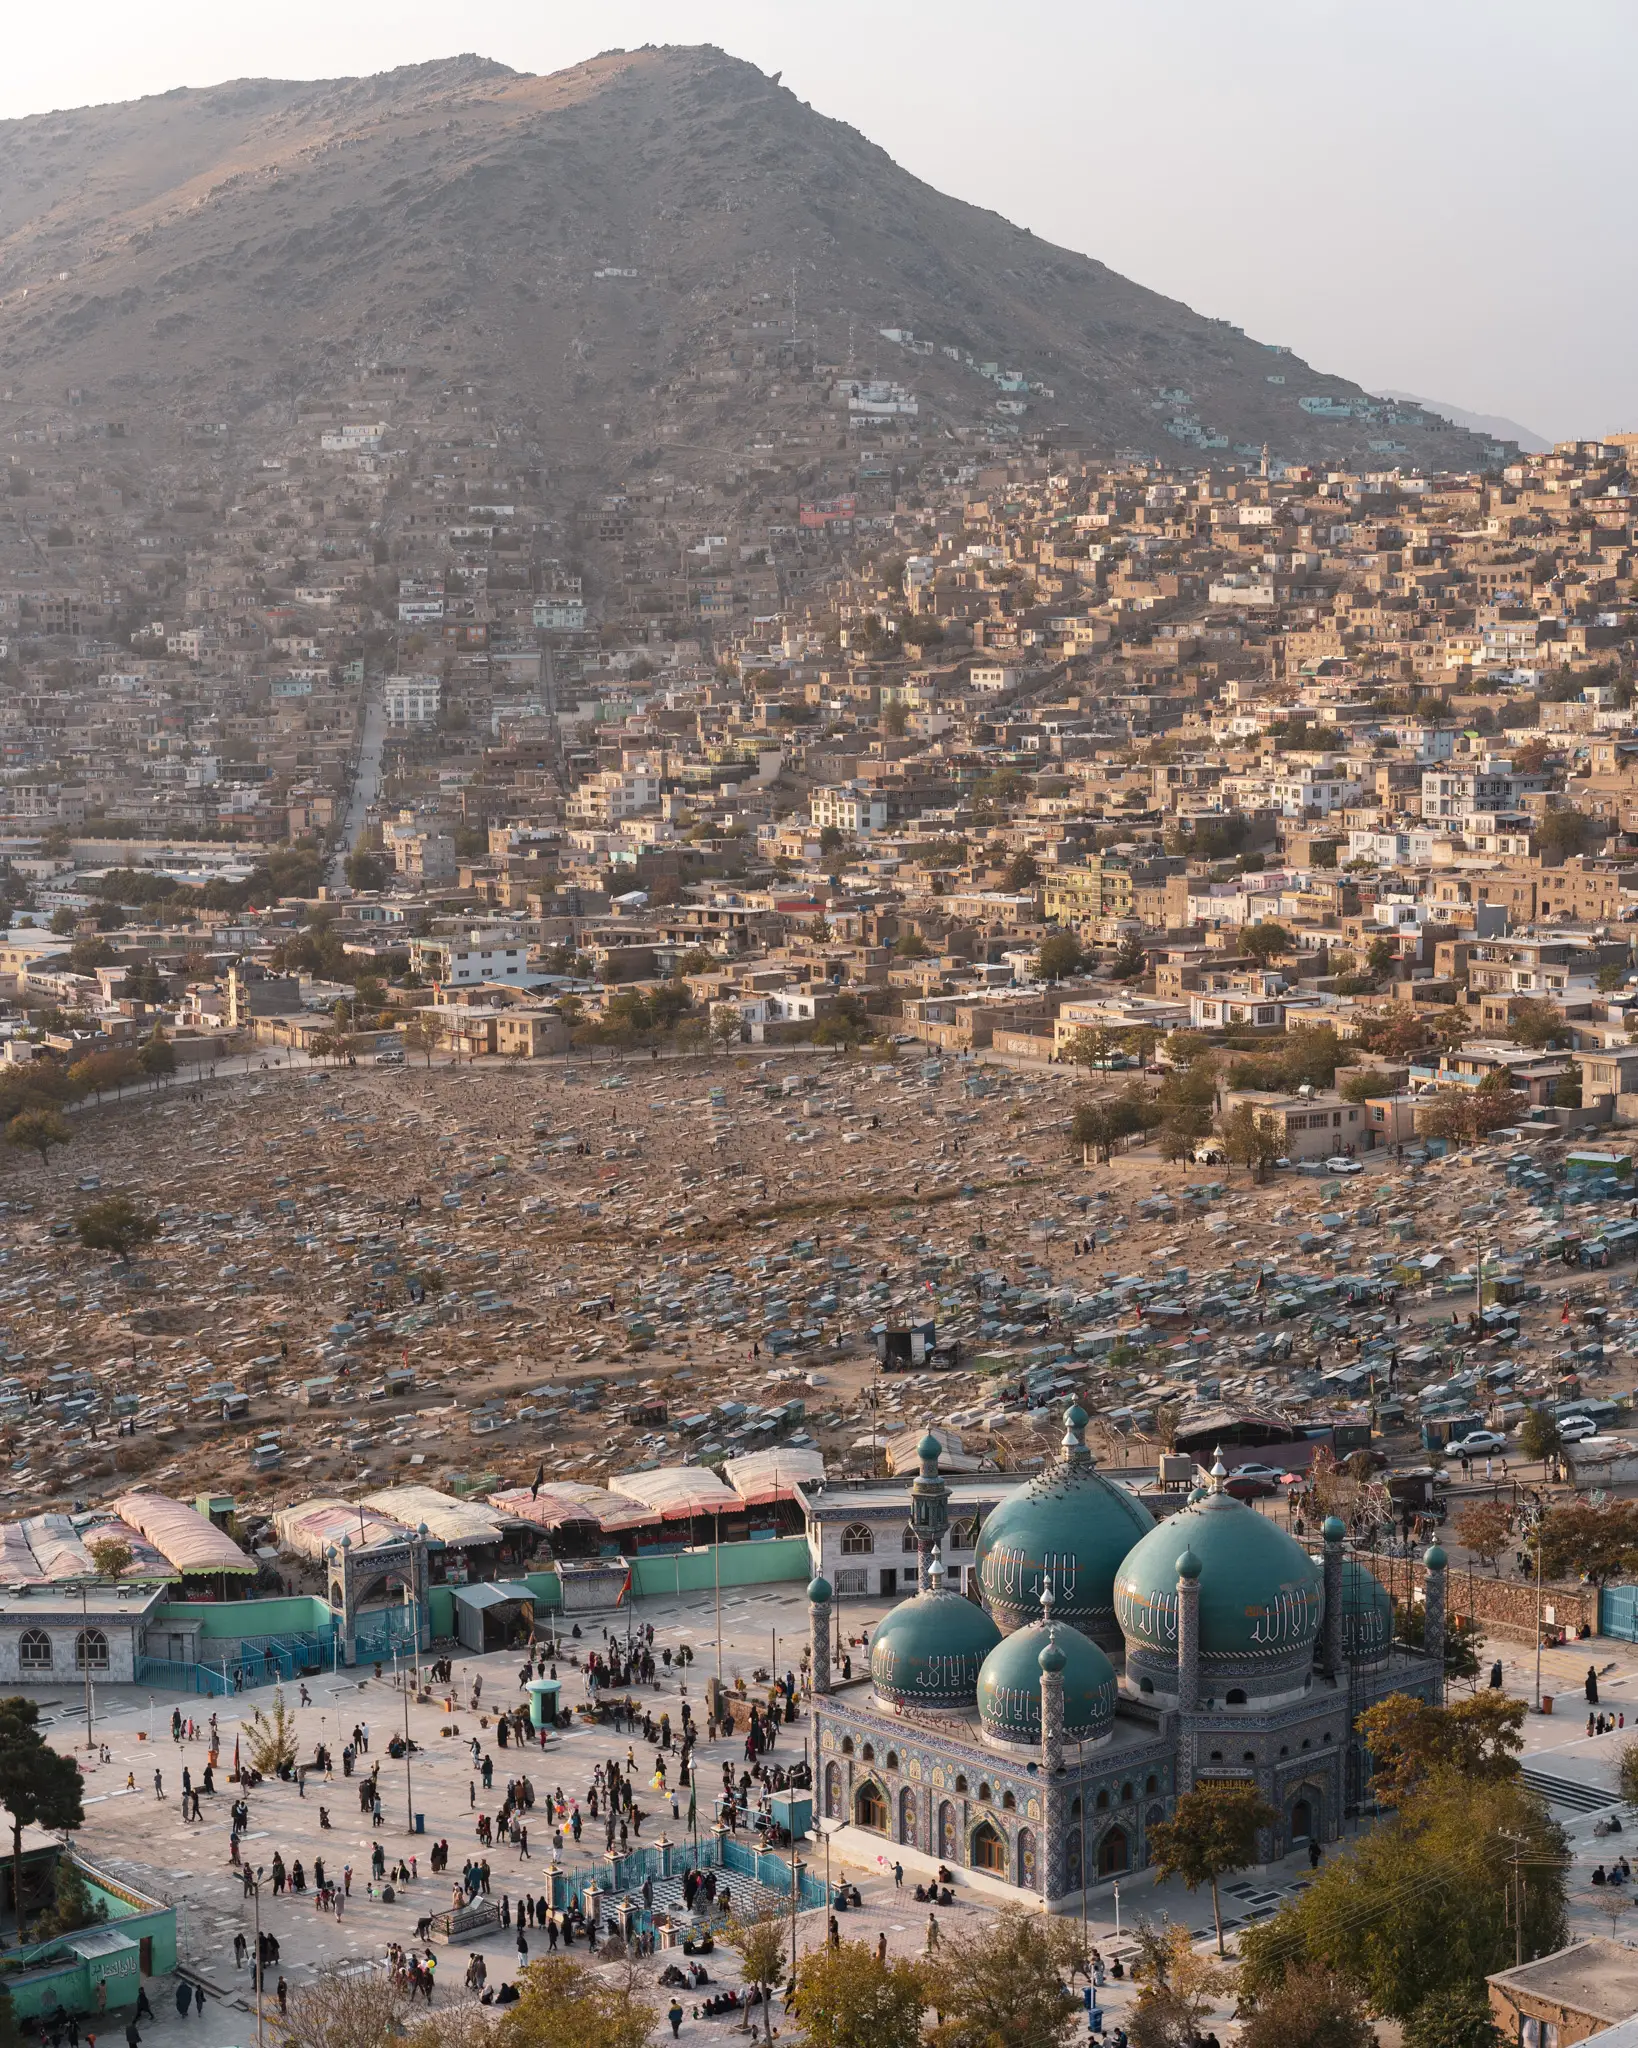 The beautiful Kart-e-Sakhi shrine in Kabul